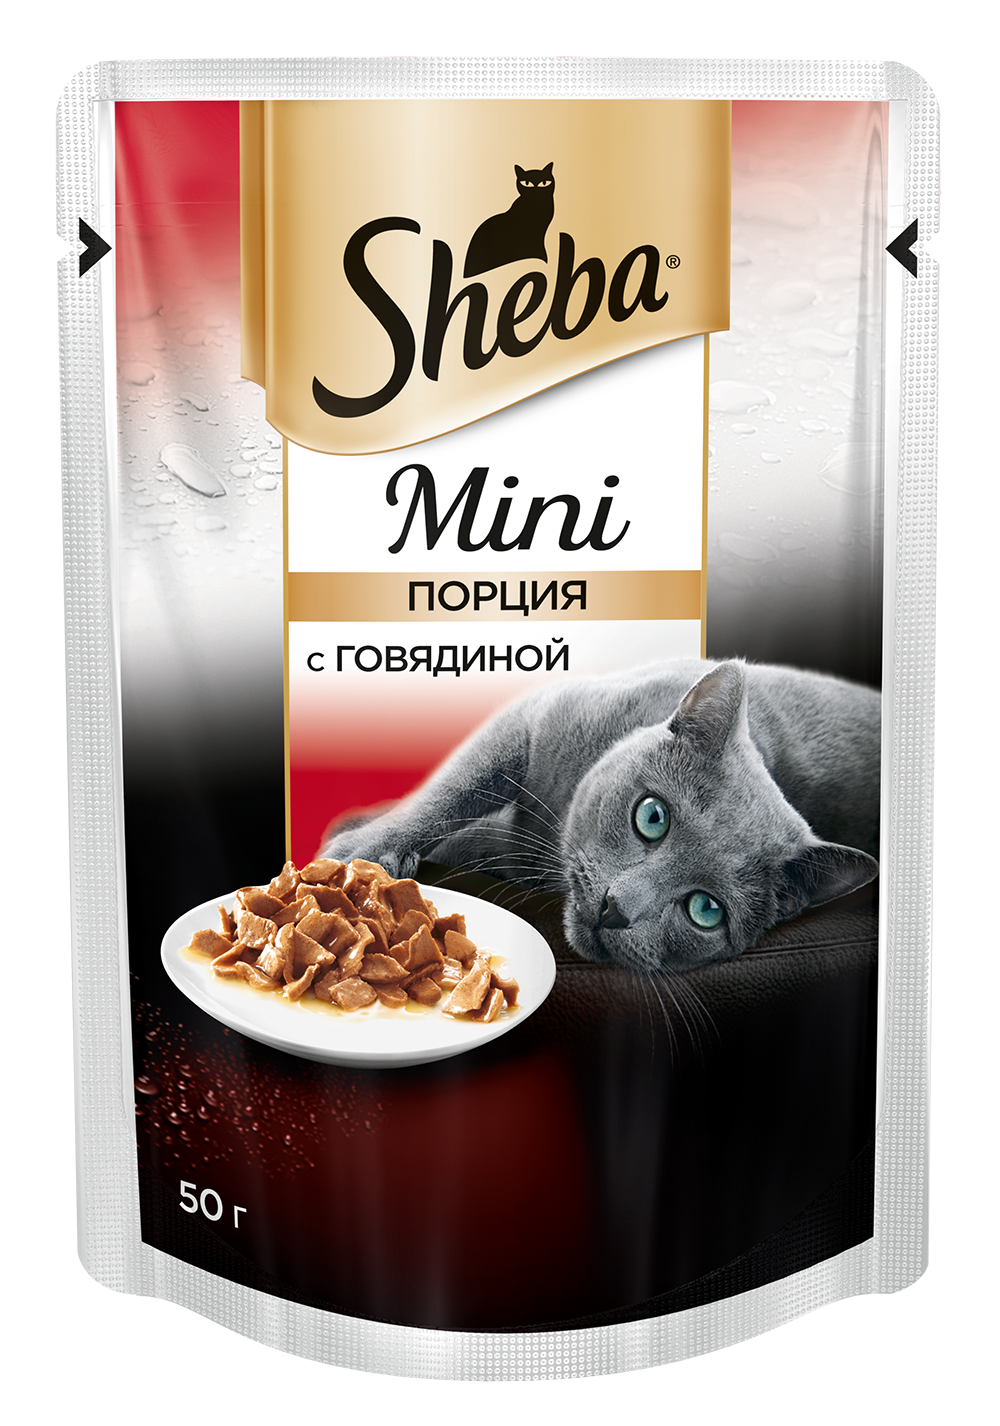 Sheba для кошек купить. Корм для кошек Sheba Mini с говядиной 50 г. Корм для кошек Sheba Mini с уткой 50 г. Корм для кошек Sheba Mini с курицей 33шт. Х 50 Г. Корм для кошек Sheba Mini с лососем 33шт. Х 50 Г.